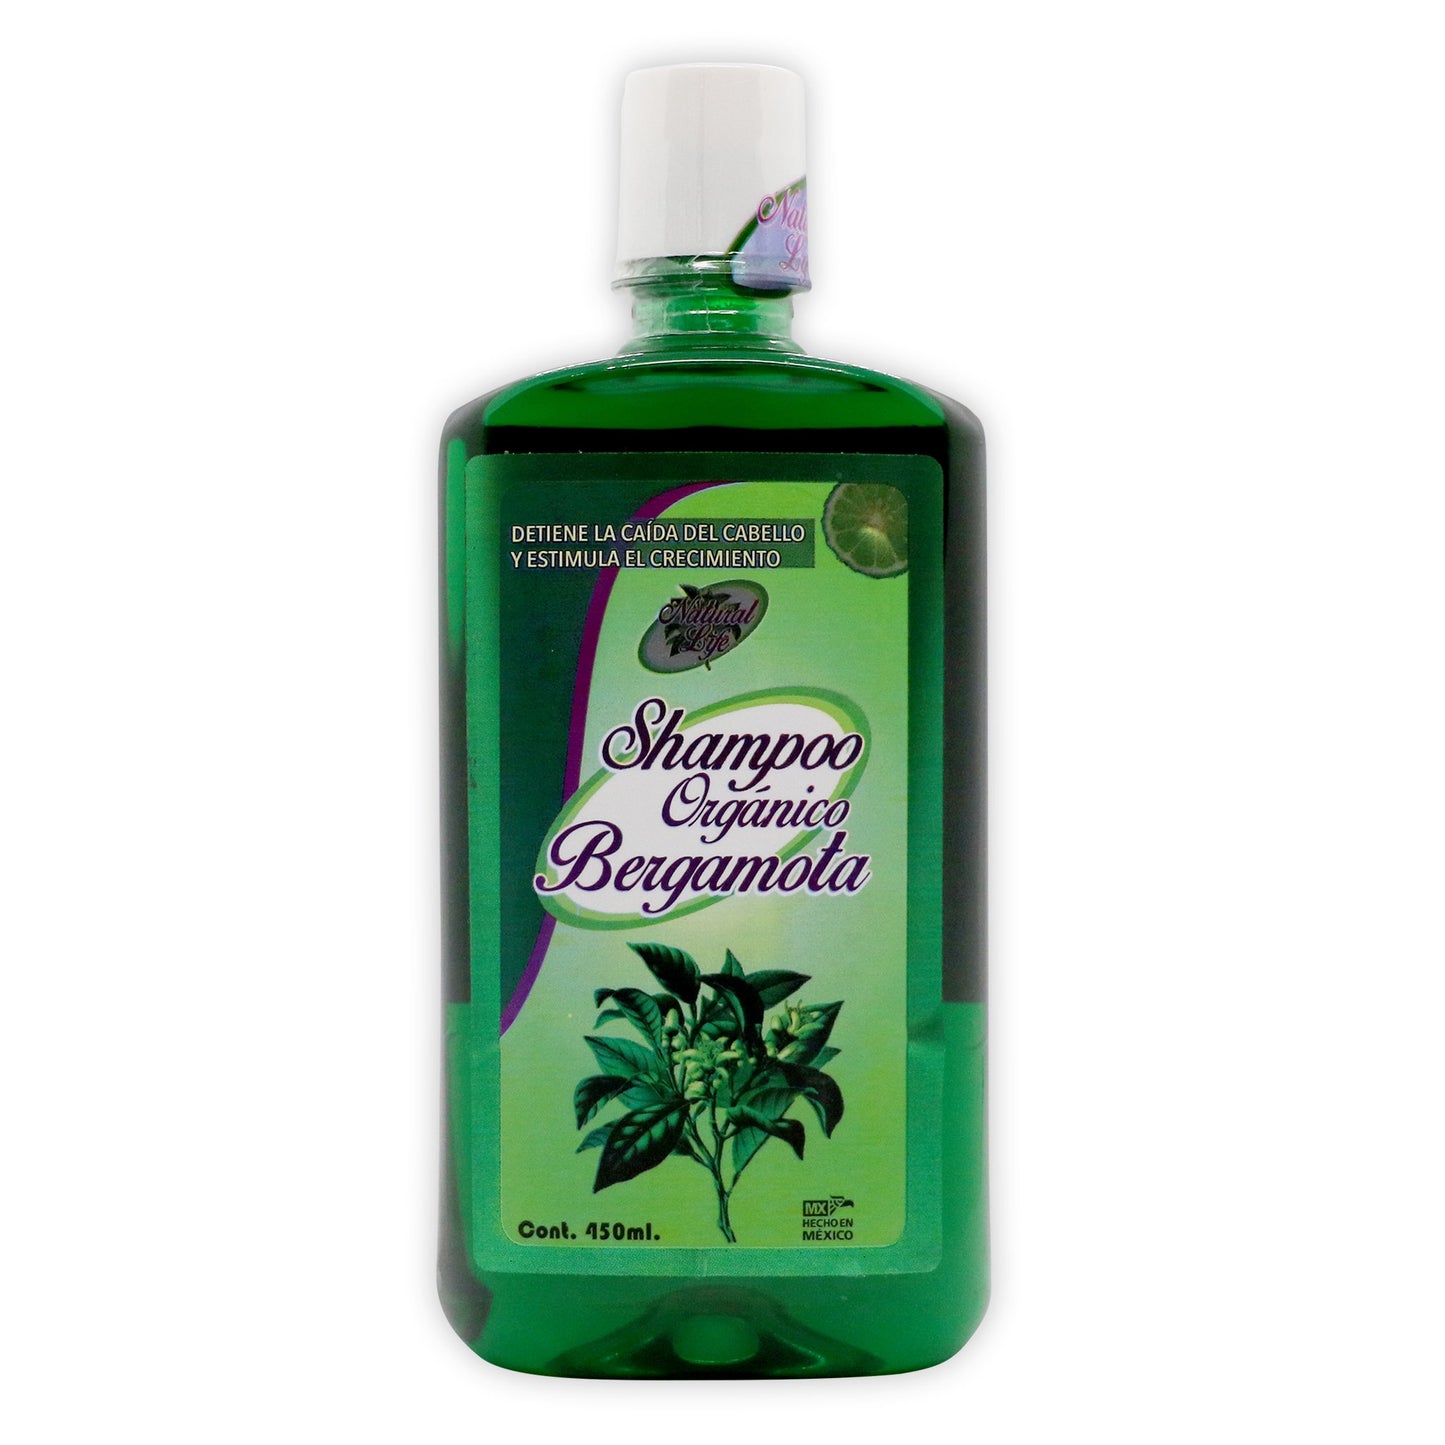 Shampoo Organico con Bergamota Verde 450 ml